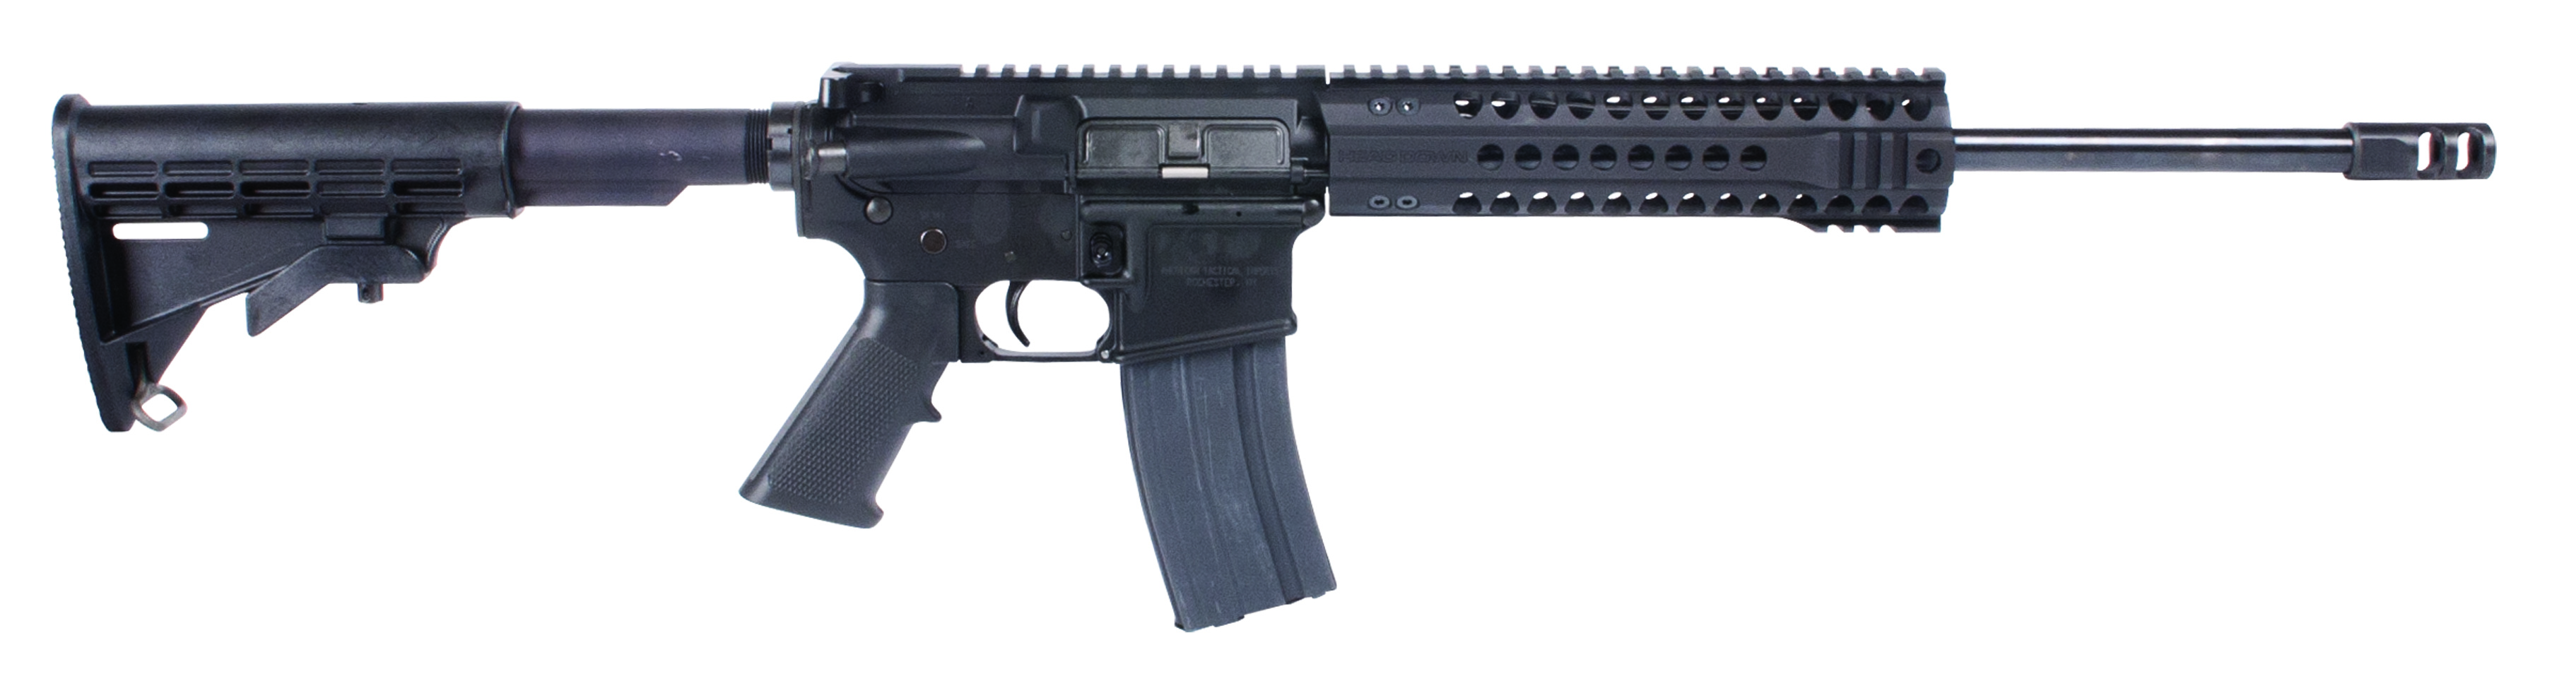 ATI Introduces 300 Blackout Rifle.